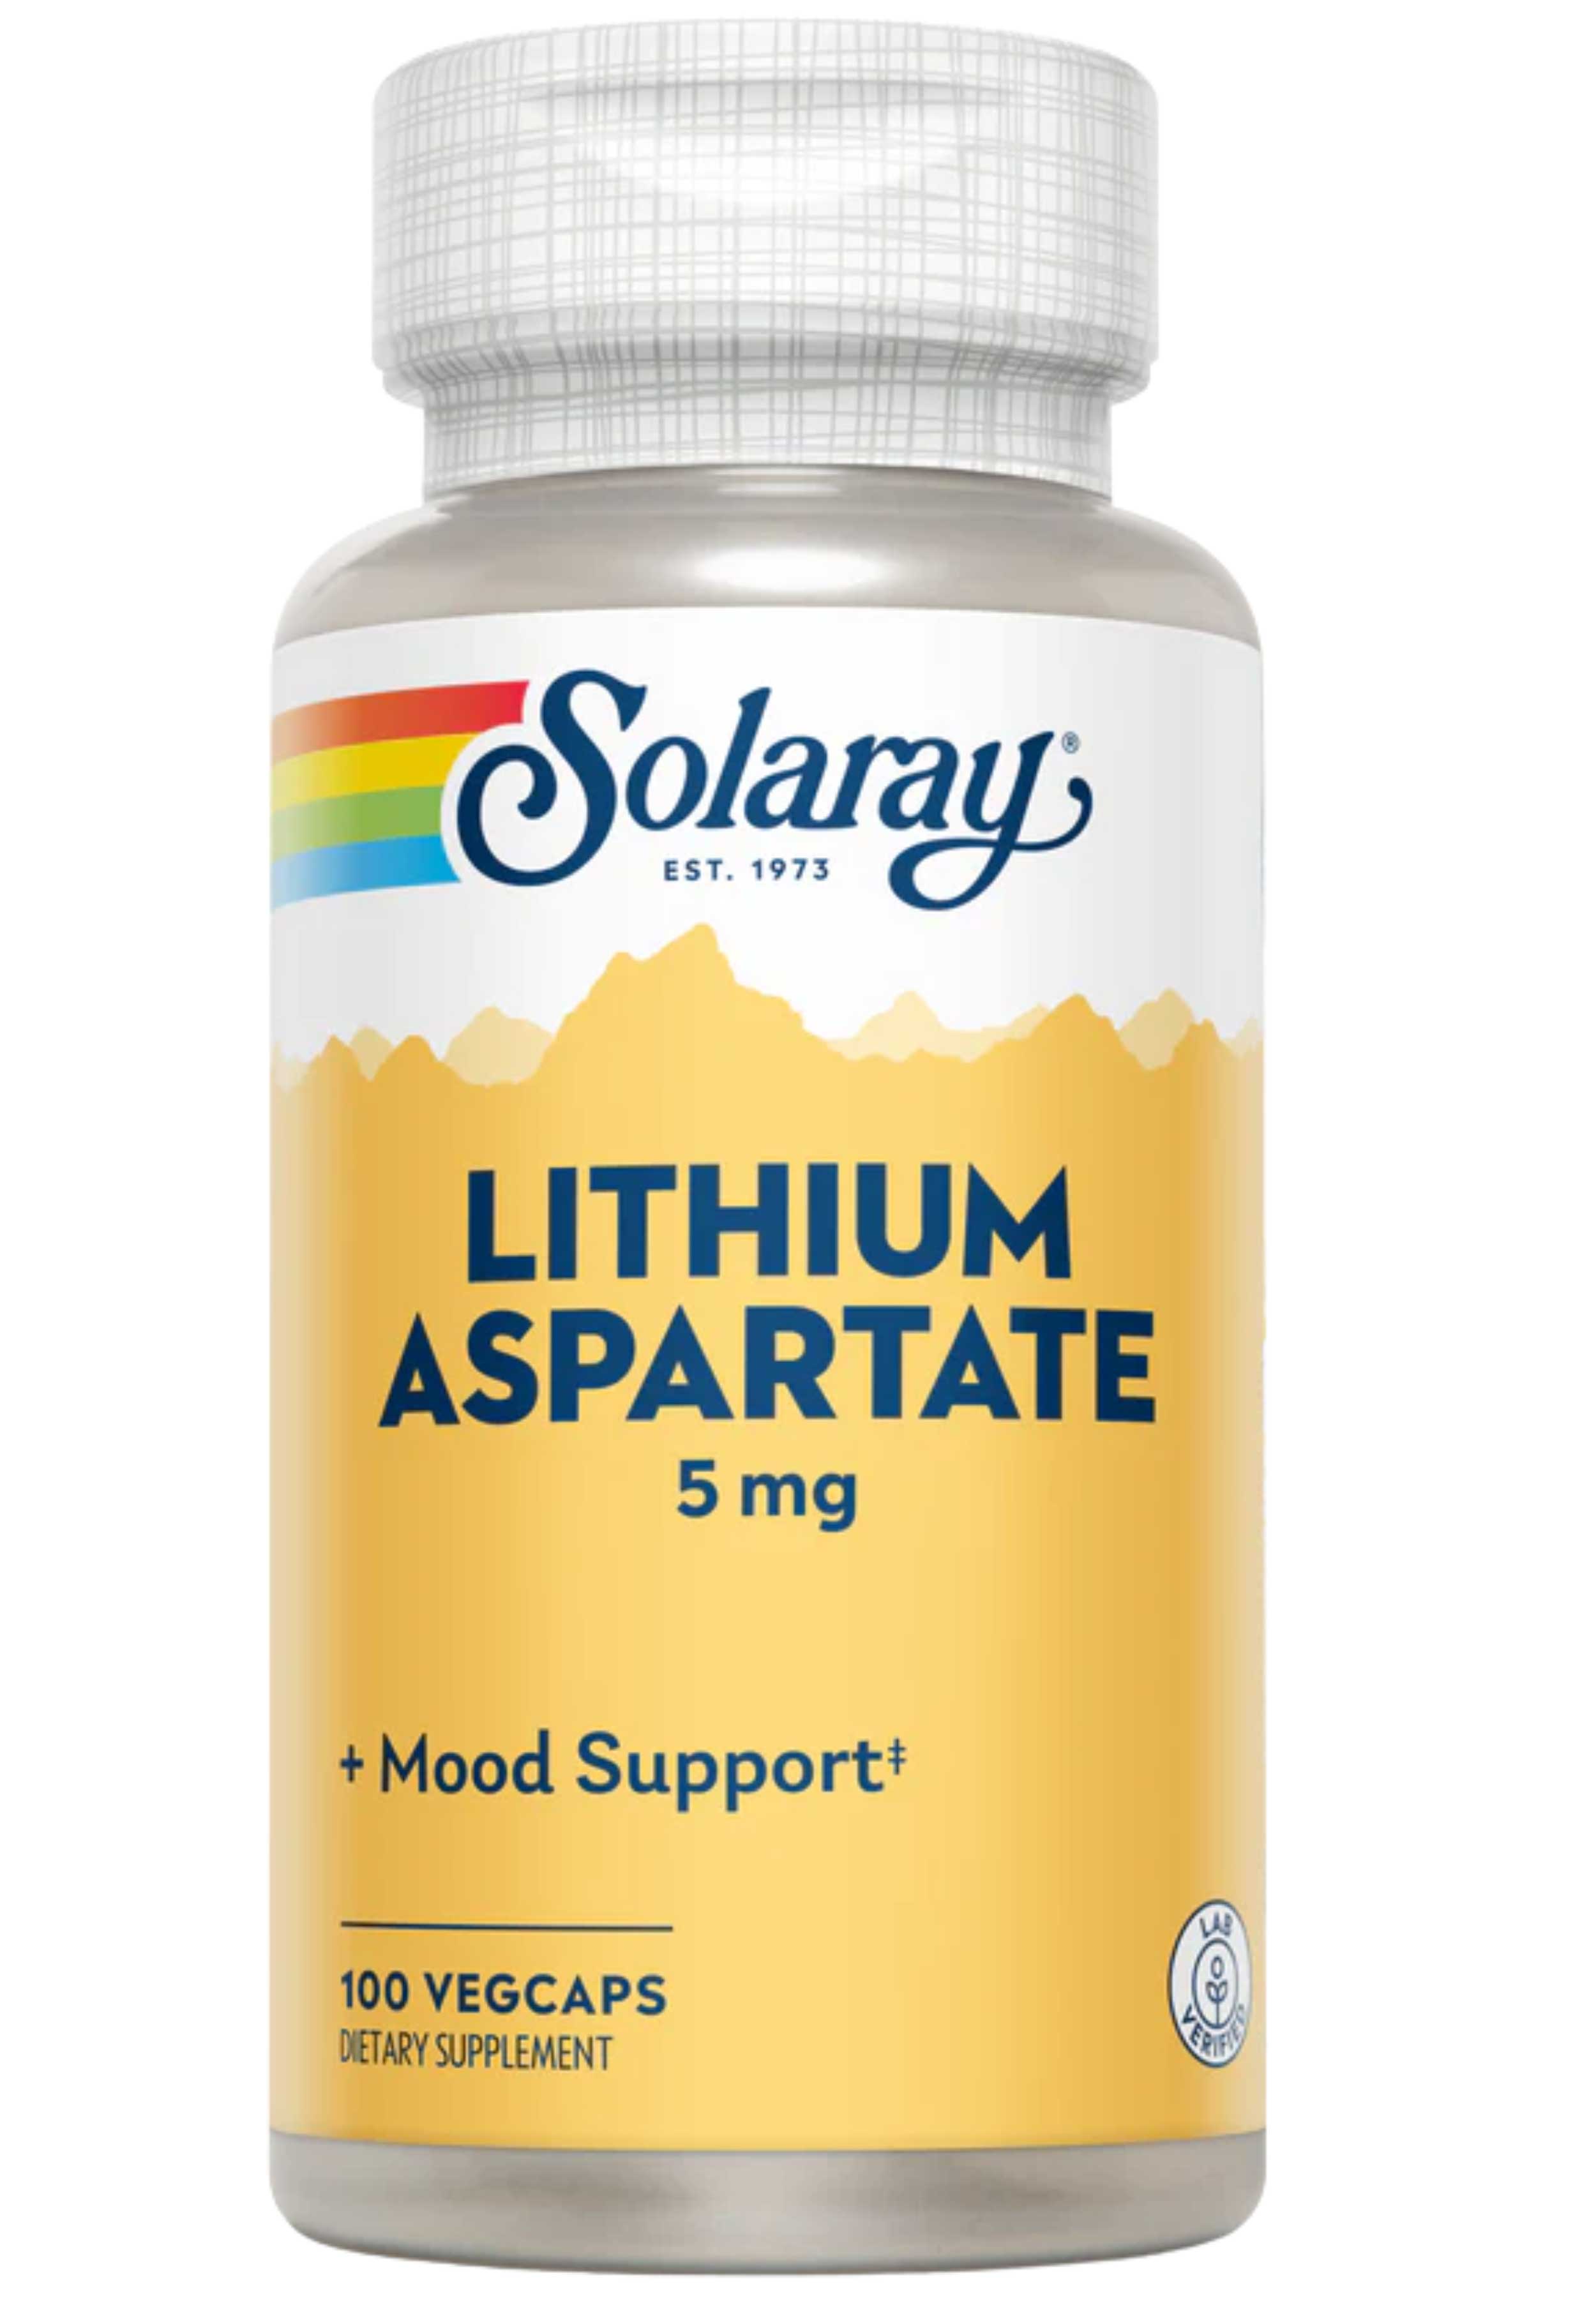 Solaray Lithium Aspartate 5 mg